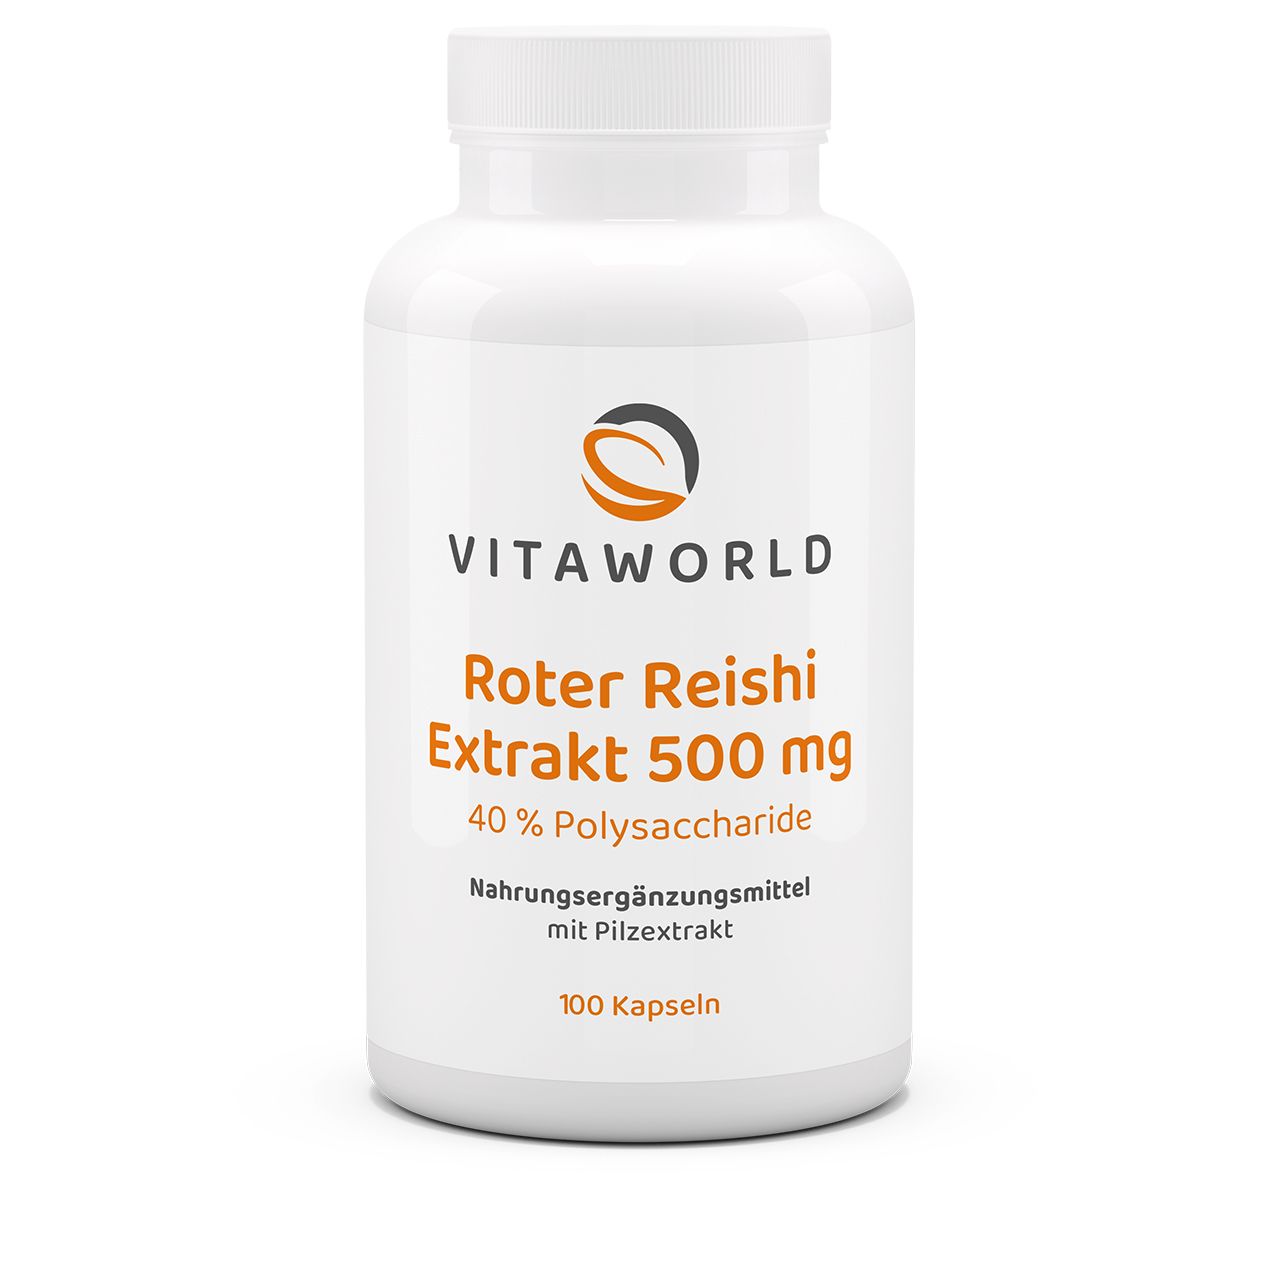 Vitaworld Roter Reishi Extrakt 40% Polysaccharide | 100 Kapseln